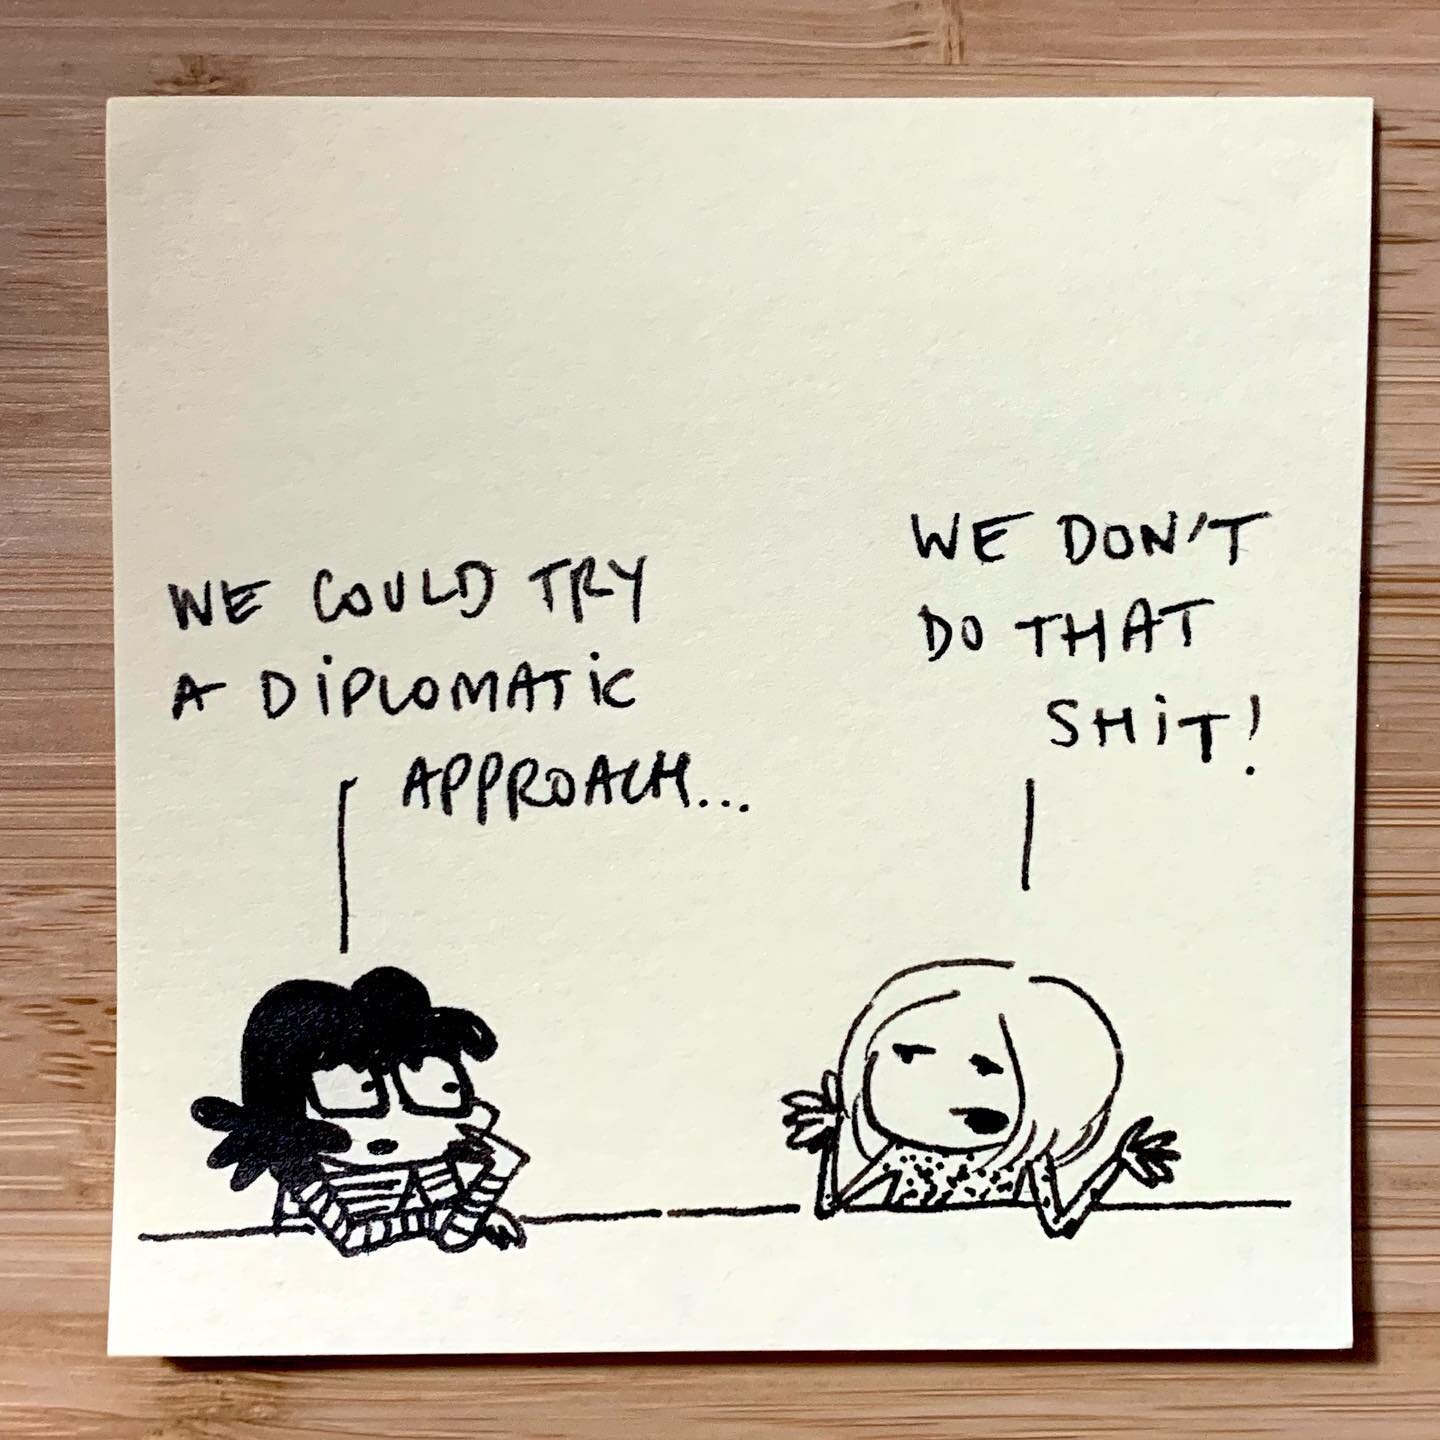 What she said 💥 
#friends #conversations #postit #doodle #cartoon #2021